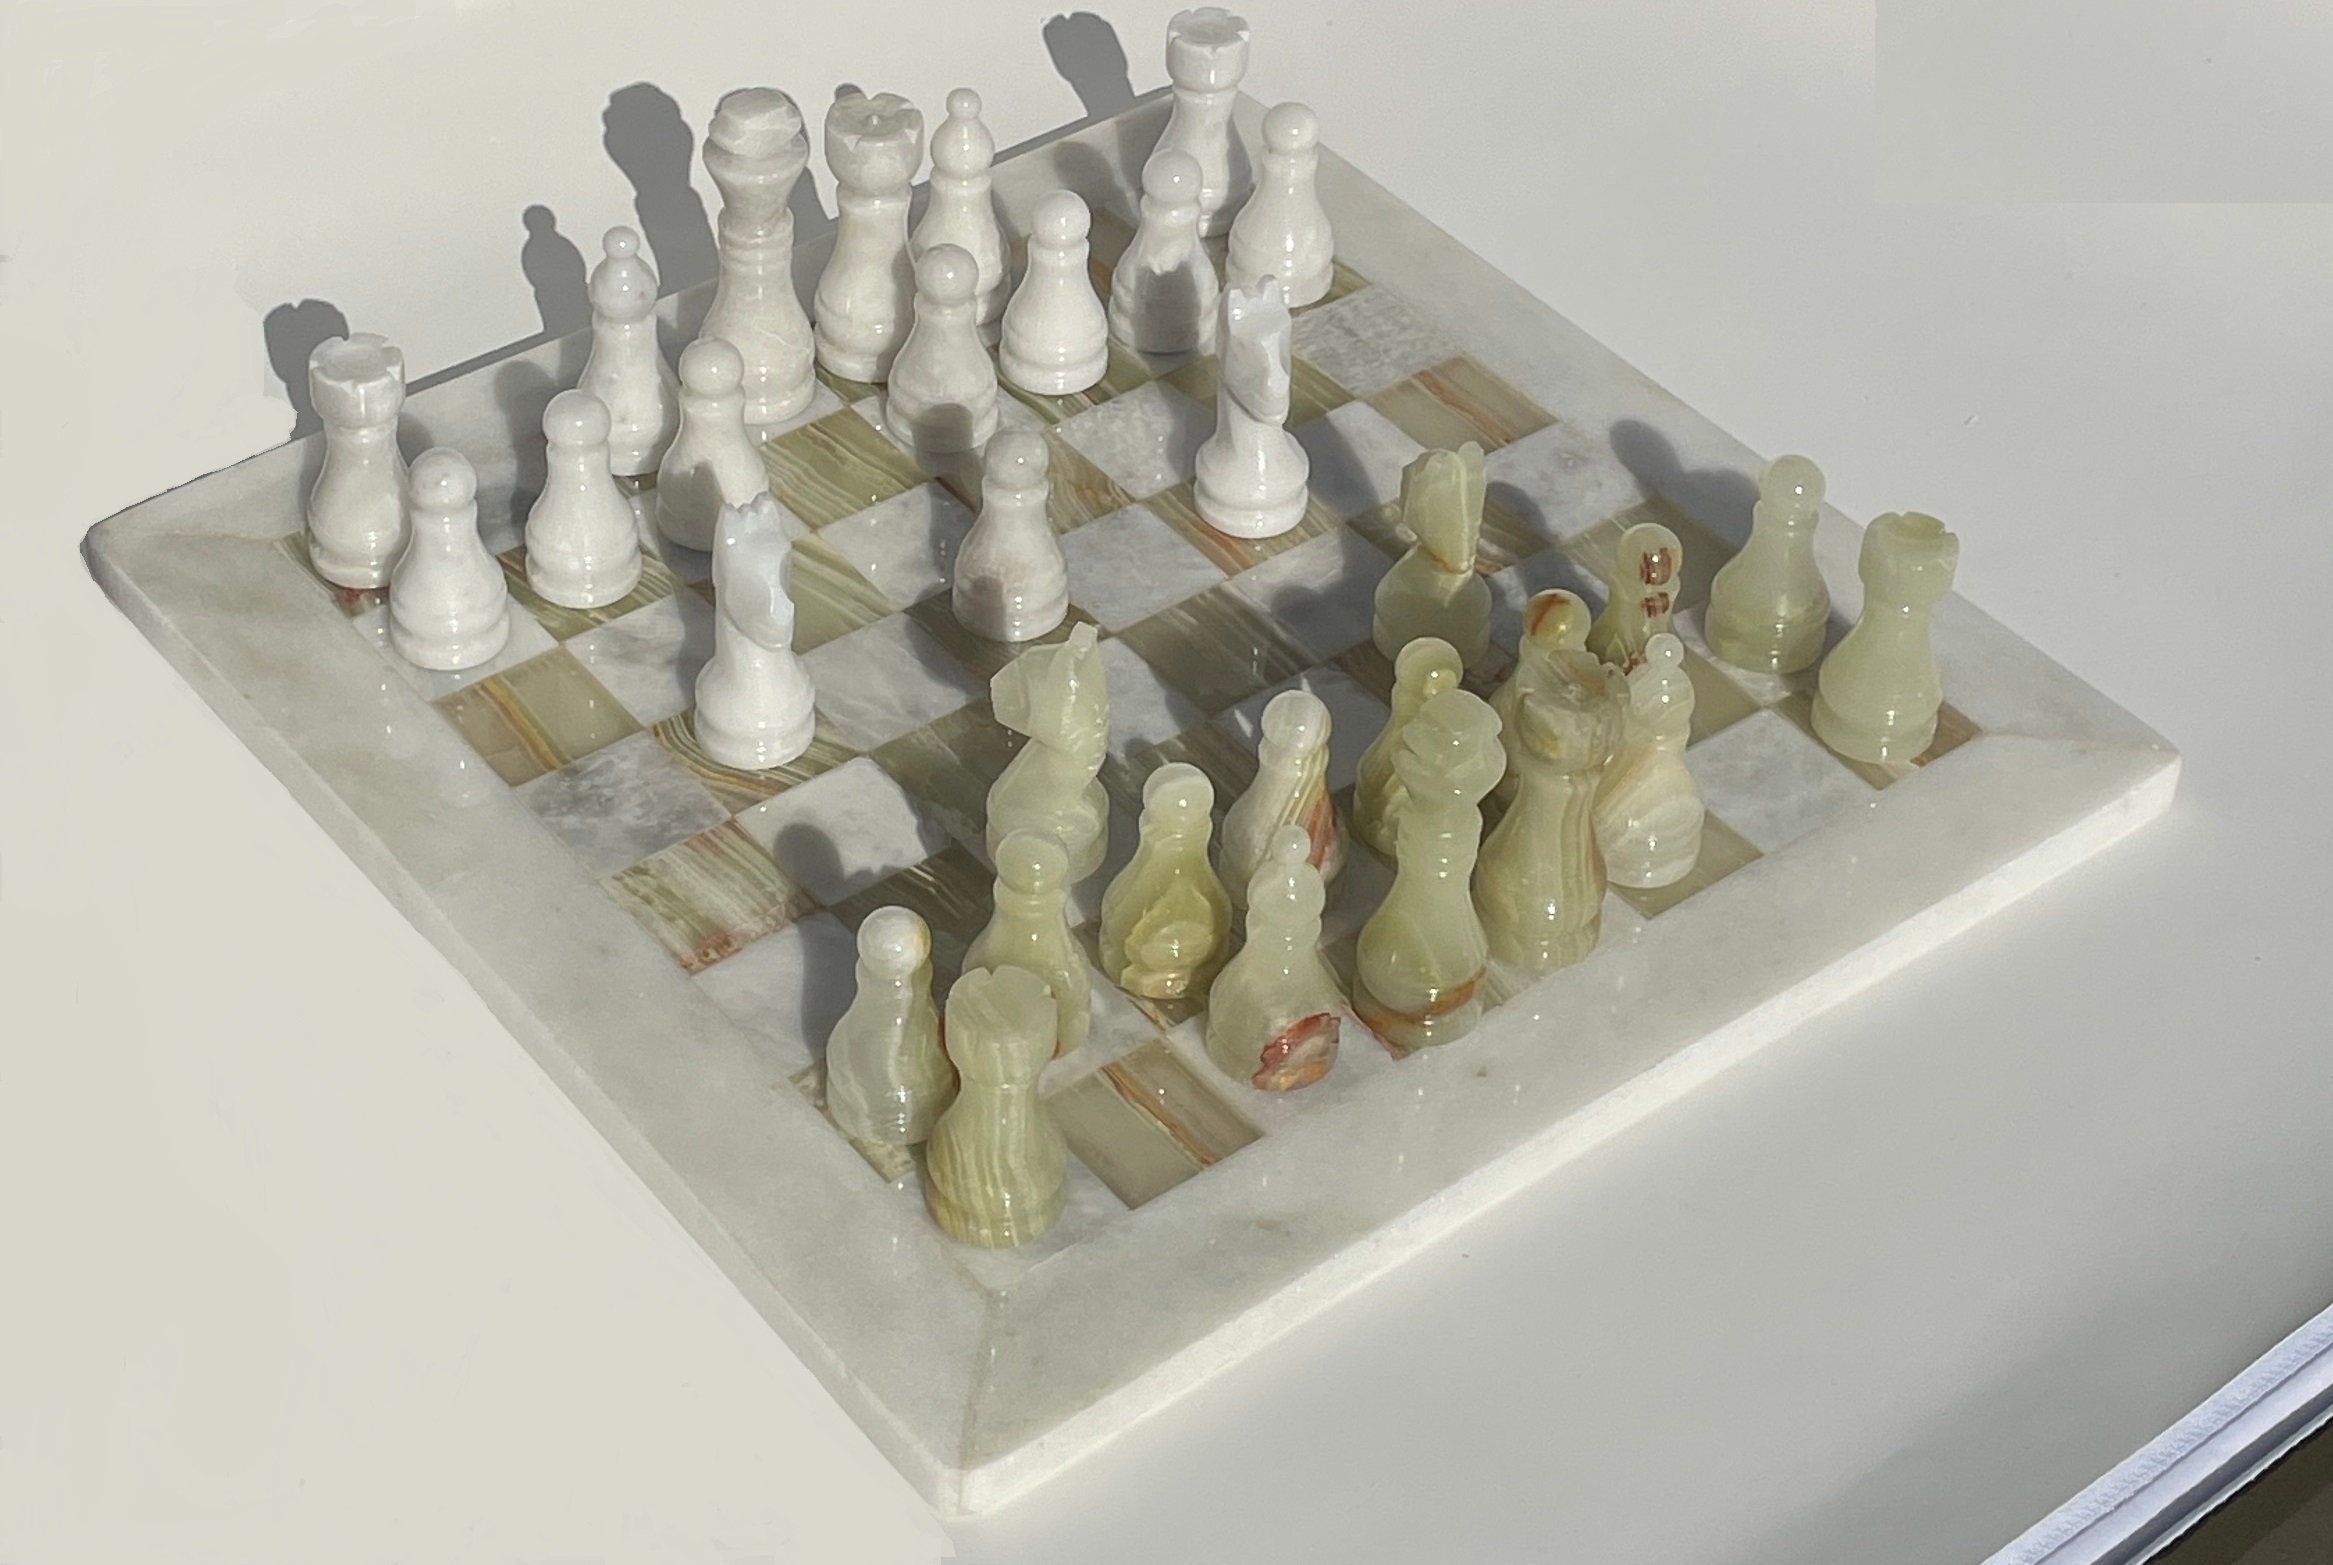 UMAID Handmade Marble Chess Set Game with Luxury Storage Box, Chess Board  12” White & Black Onyx Marble Chess Sets & Marble Chess Pieces, Unique  Chess